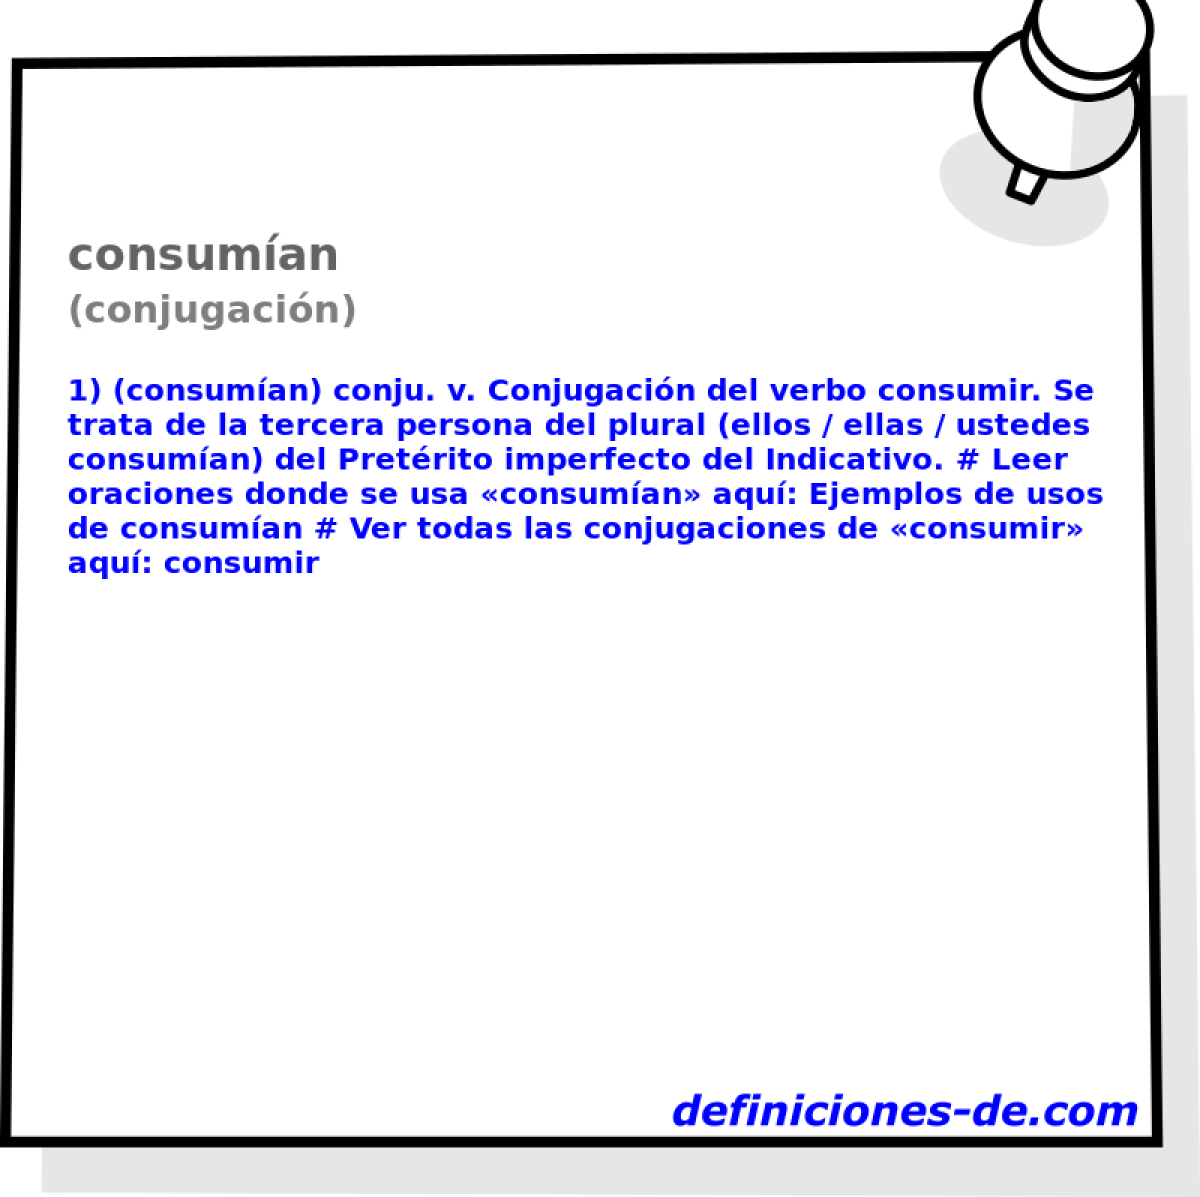 consuman (conjugacin)